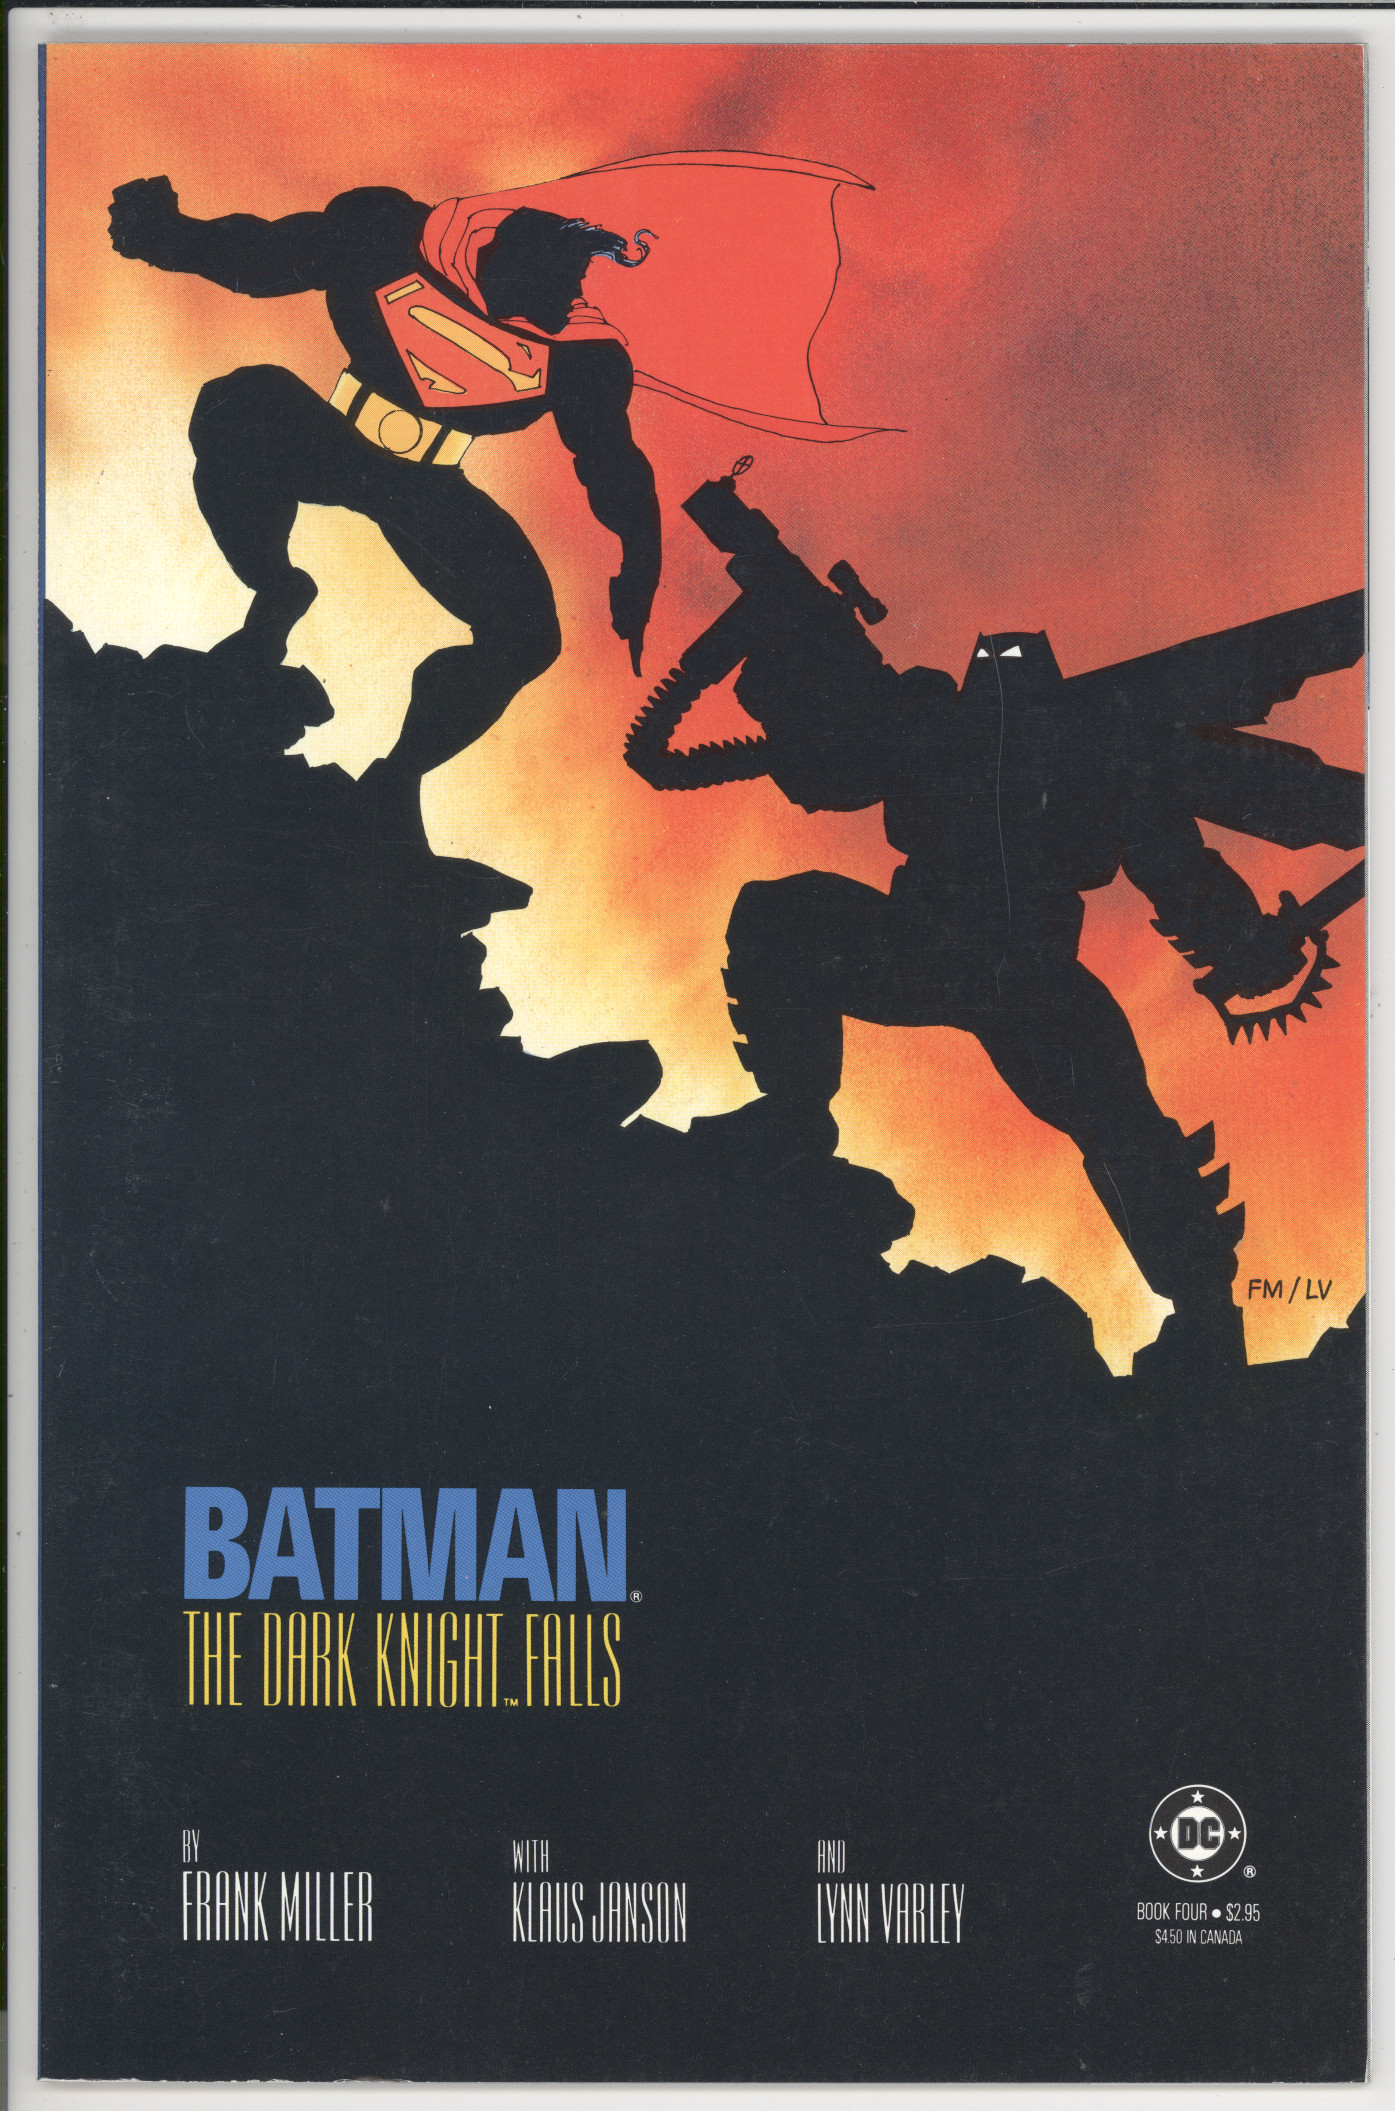 Batman The Dark Knight Returns #4 front